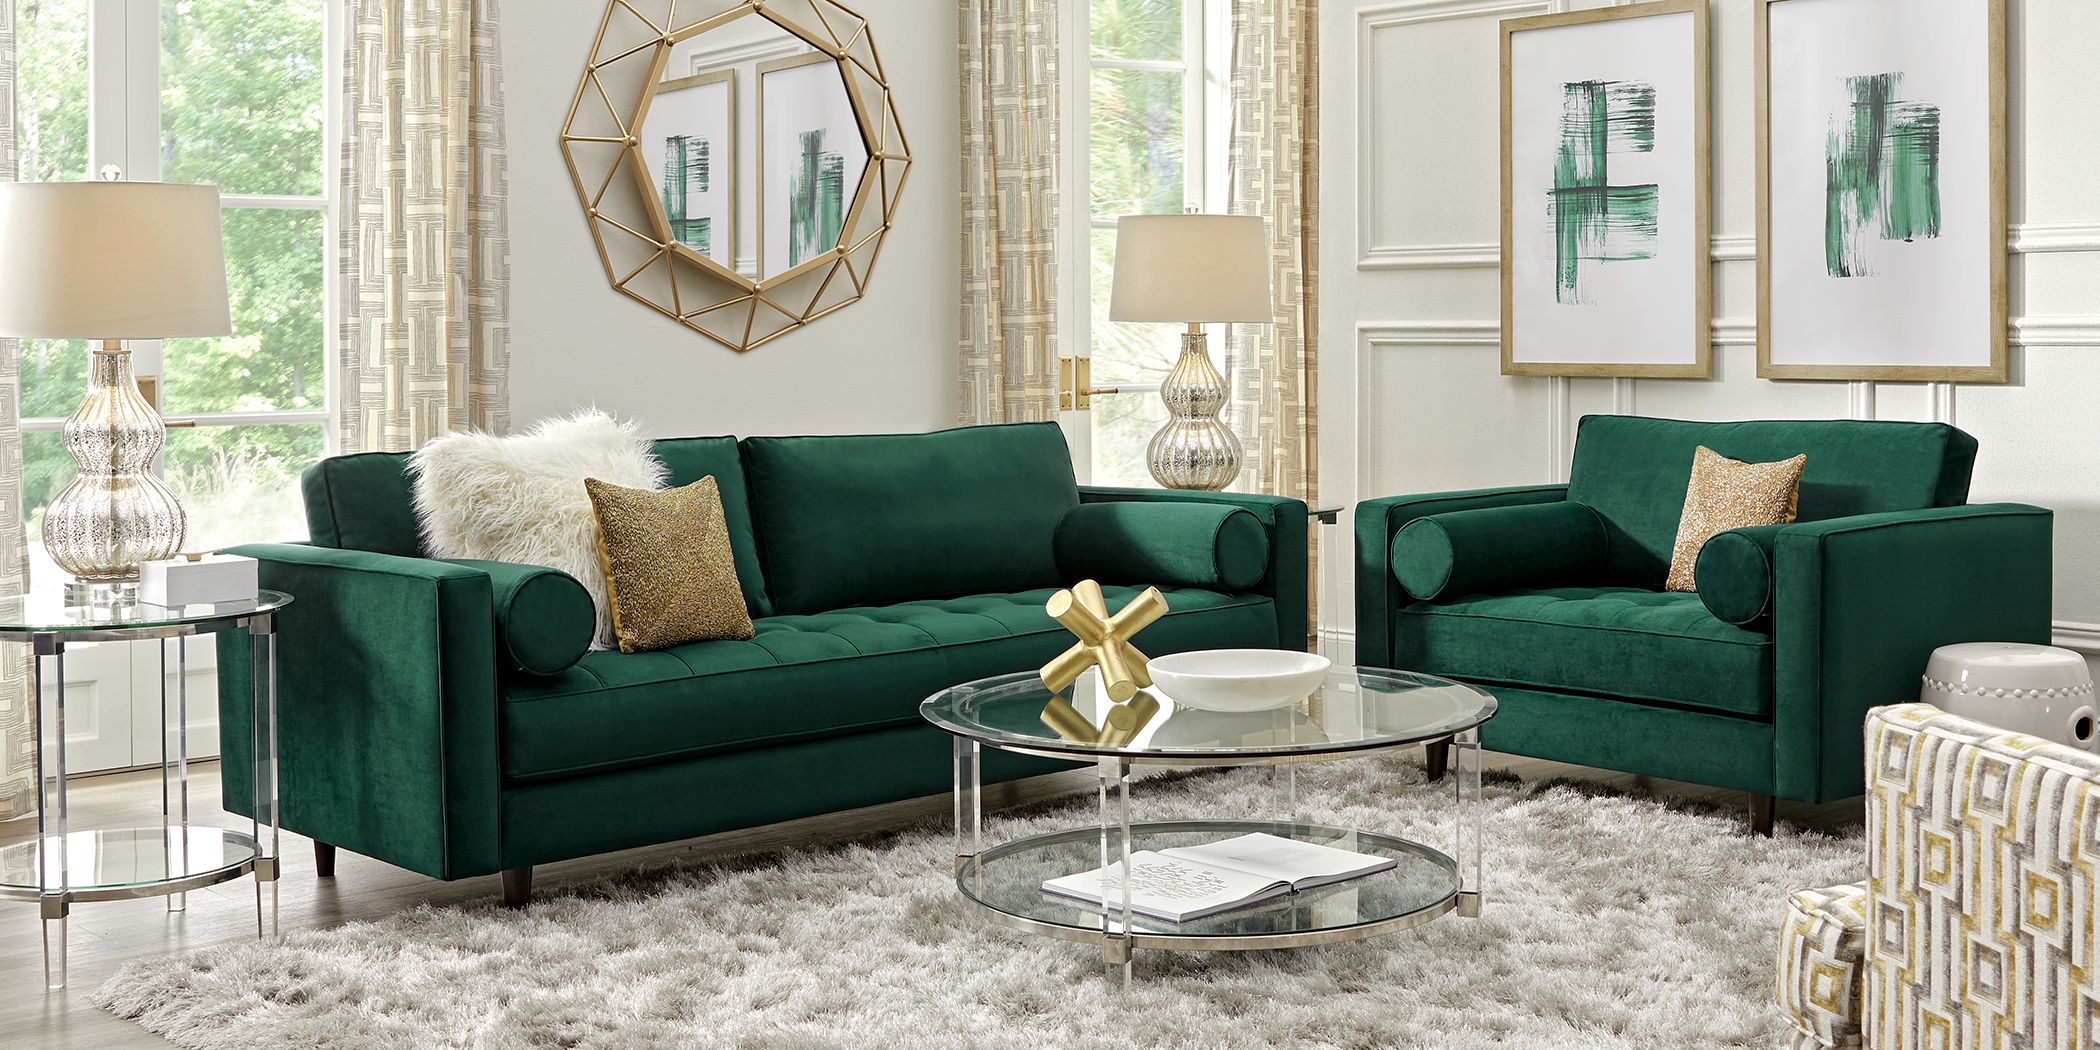 Sofia Vergara Pacific Palisades Emerald Plush 2 Pc Living Room